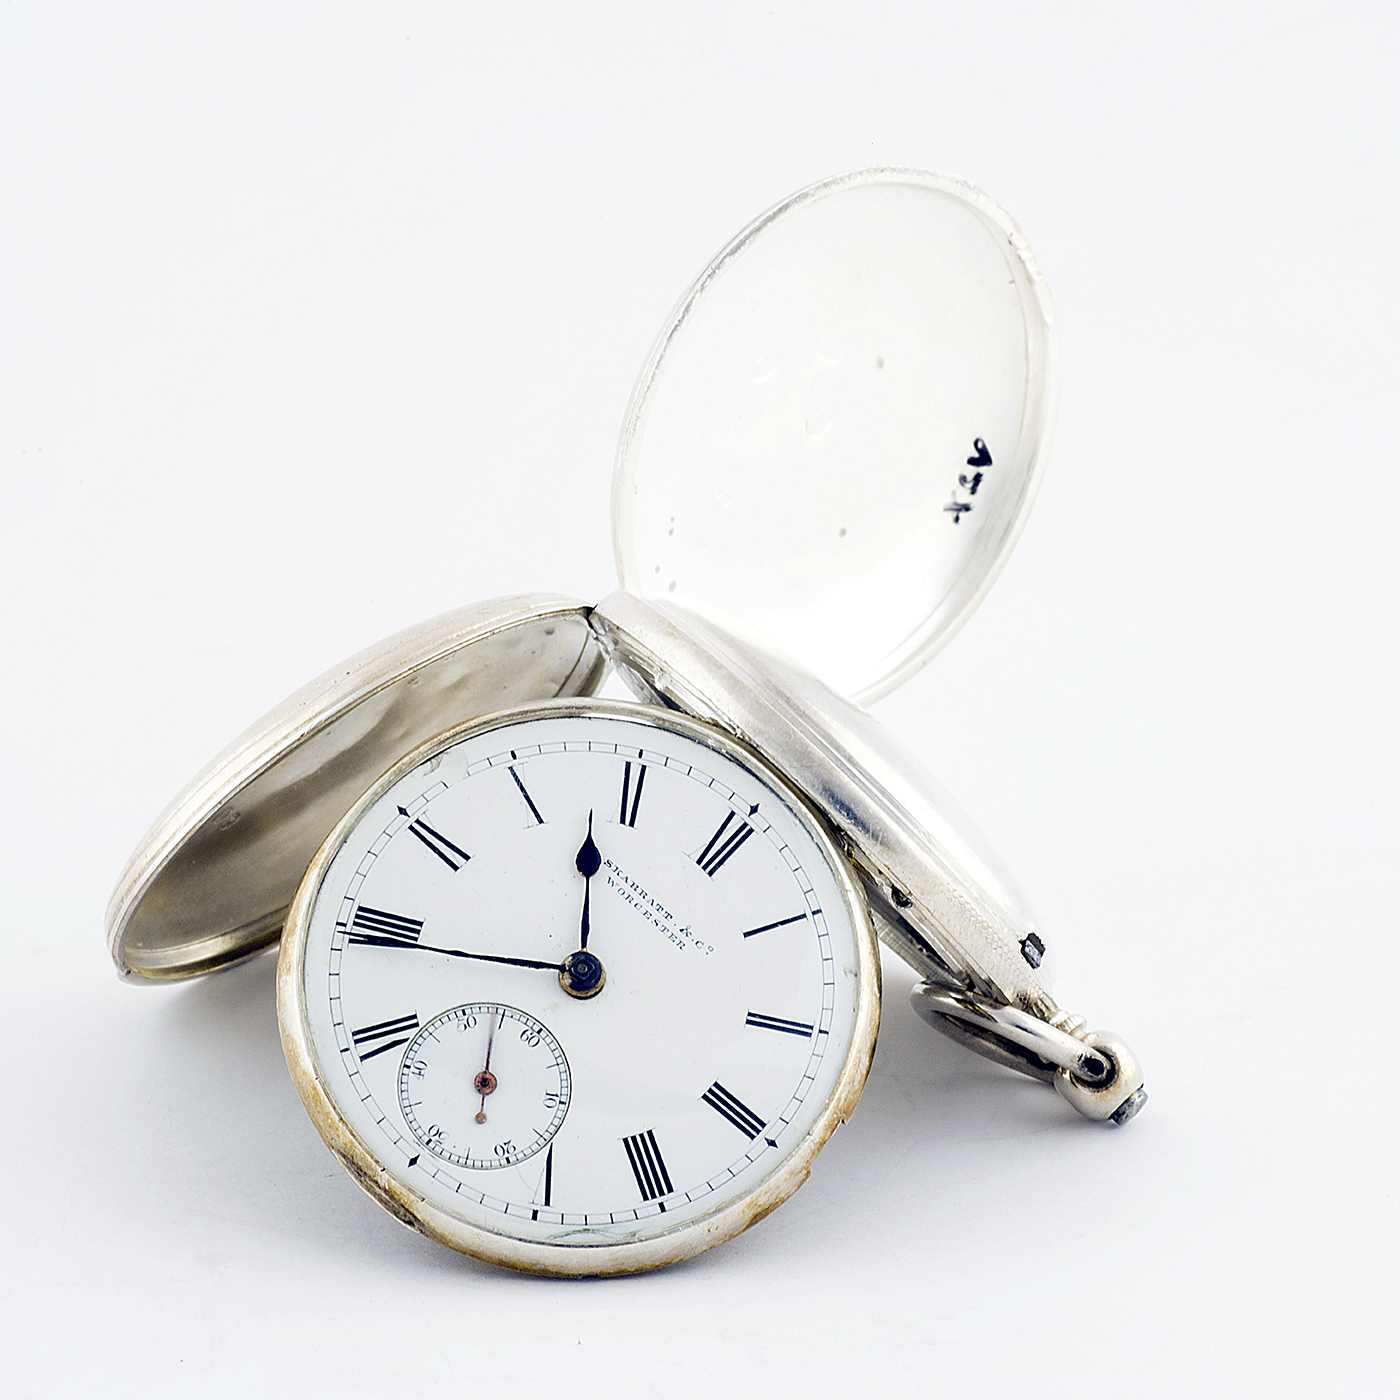 Skarratt & Co. (Worcester). (Bian Loomes, pág. 214). Reloj de Bolsillo, saboneta, Half Fusee (Semicatalino). Londres, 1859.